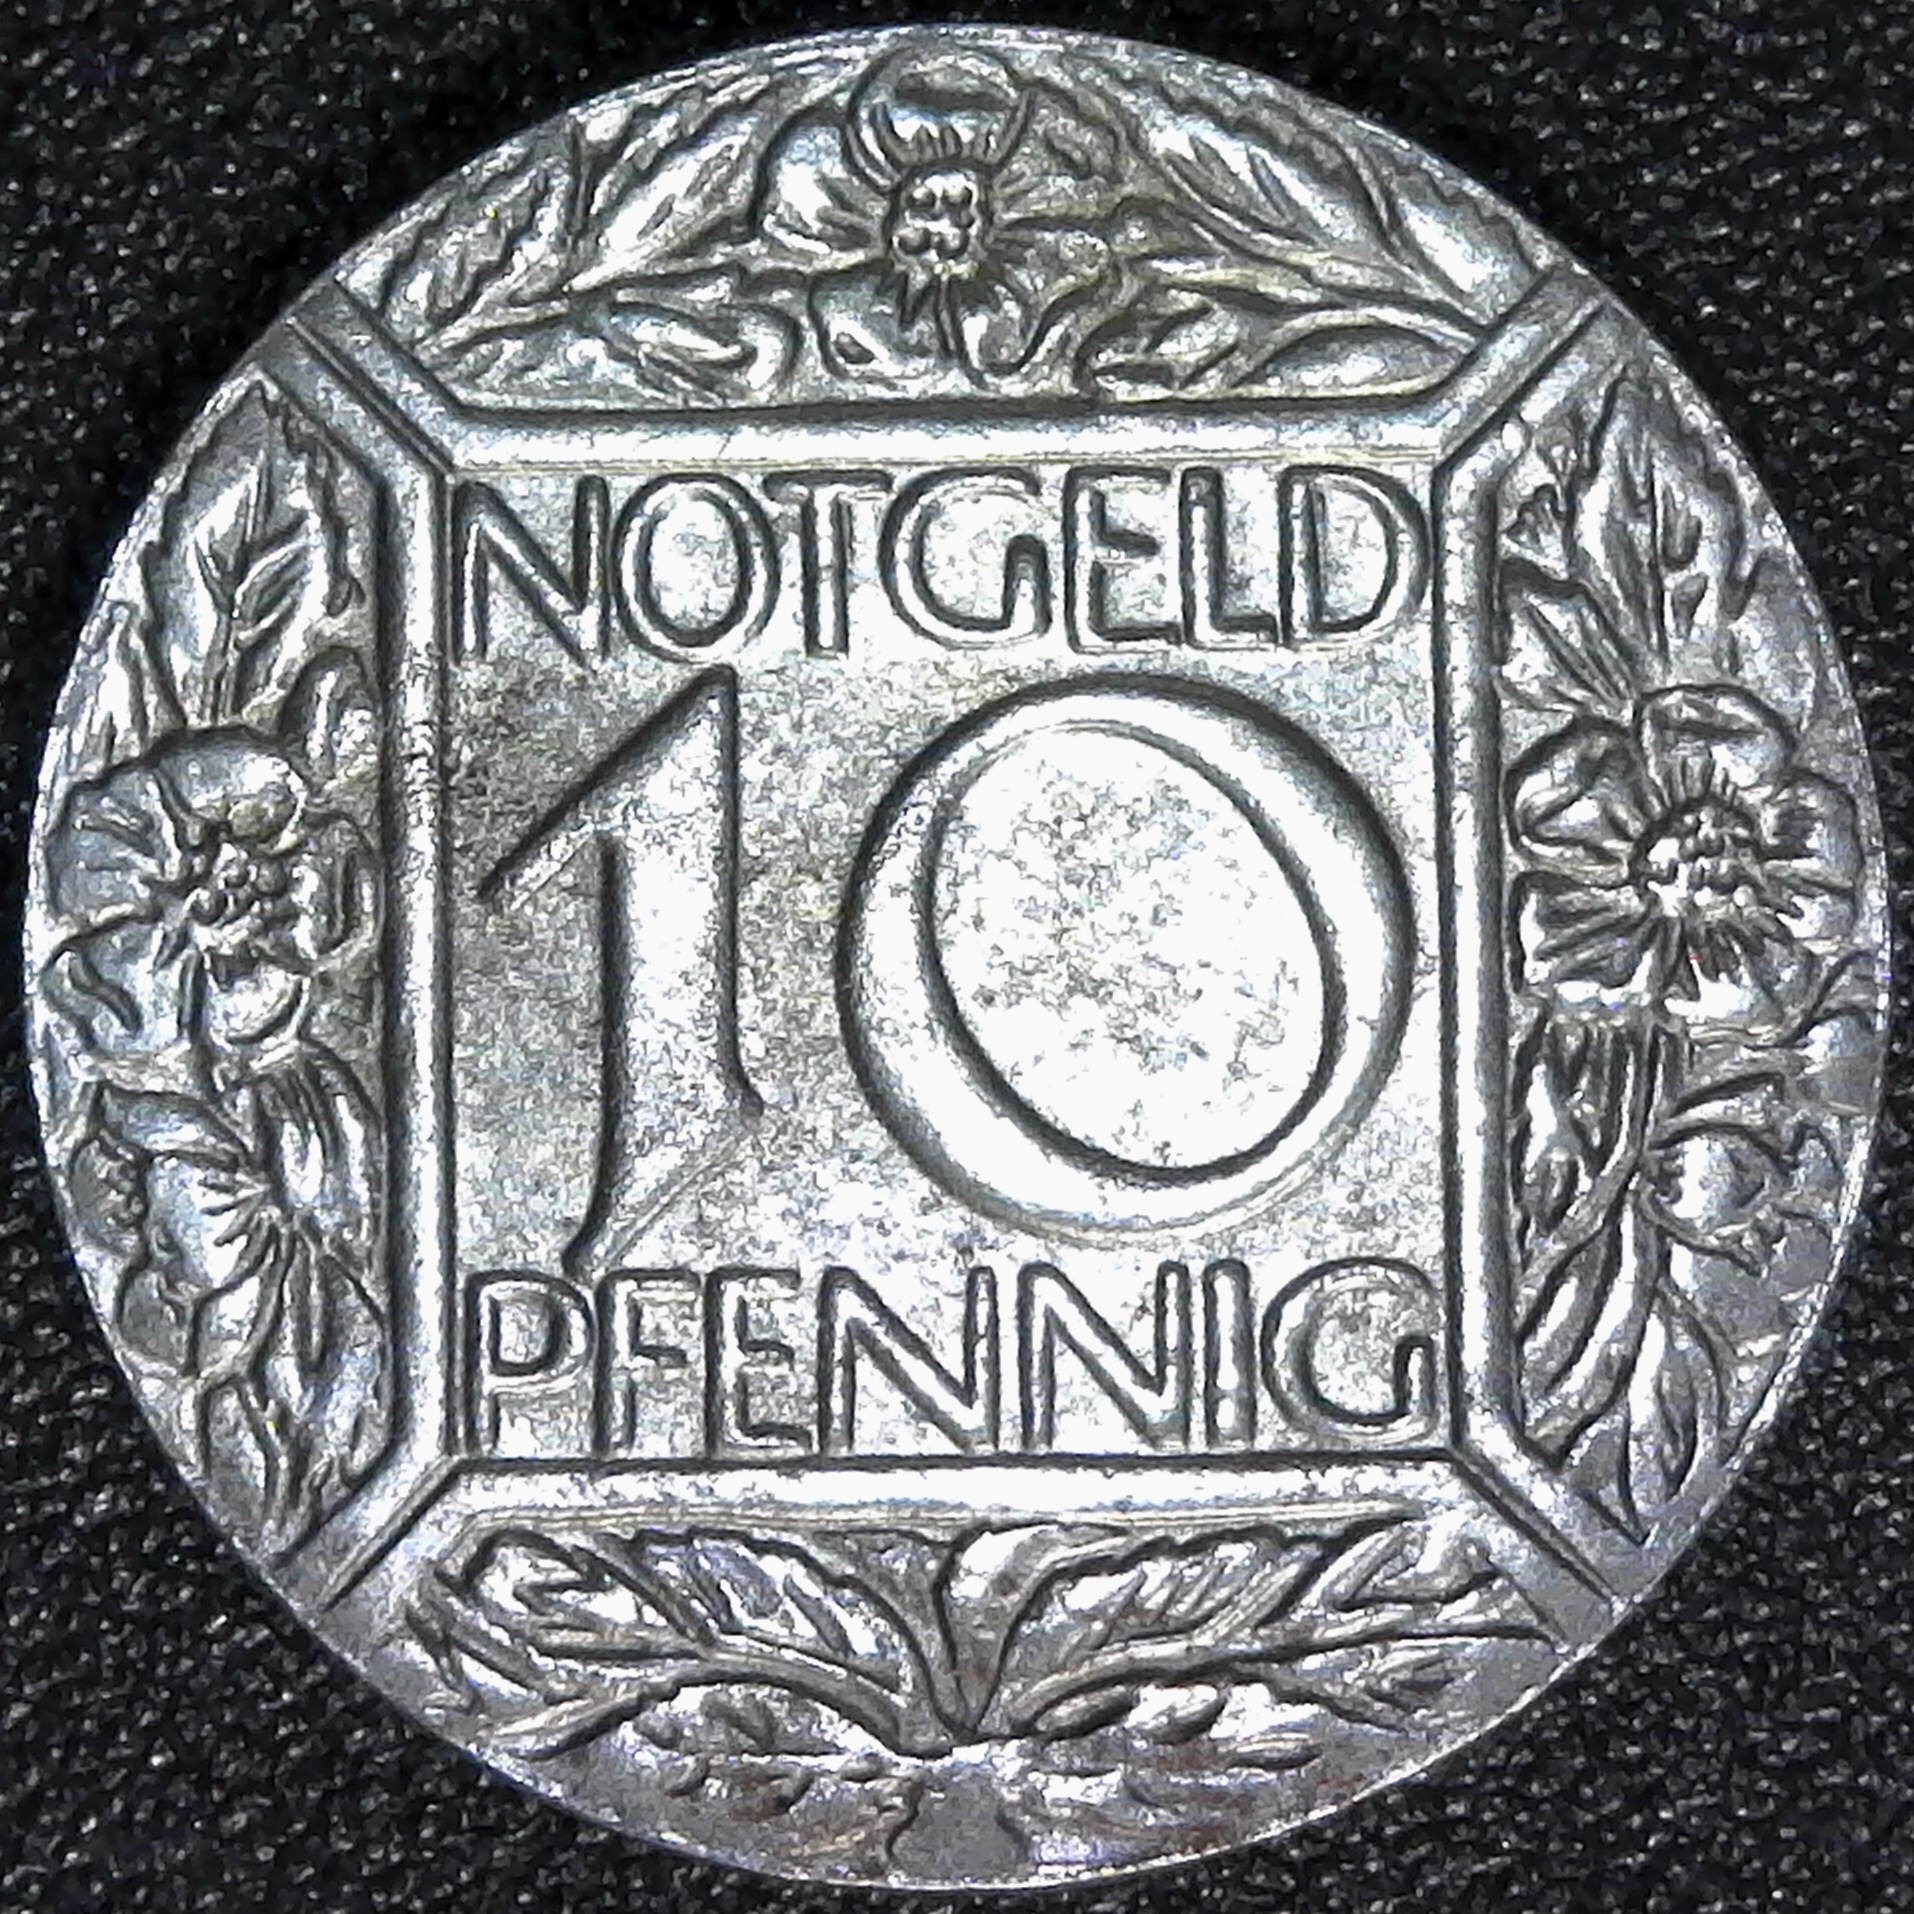 Germany Leichlingen 10 Pfennig Notgeld 1920 rev.jpg